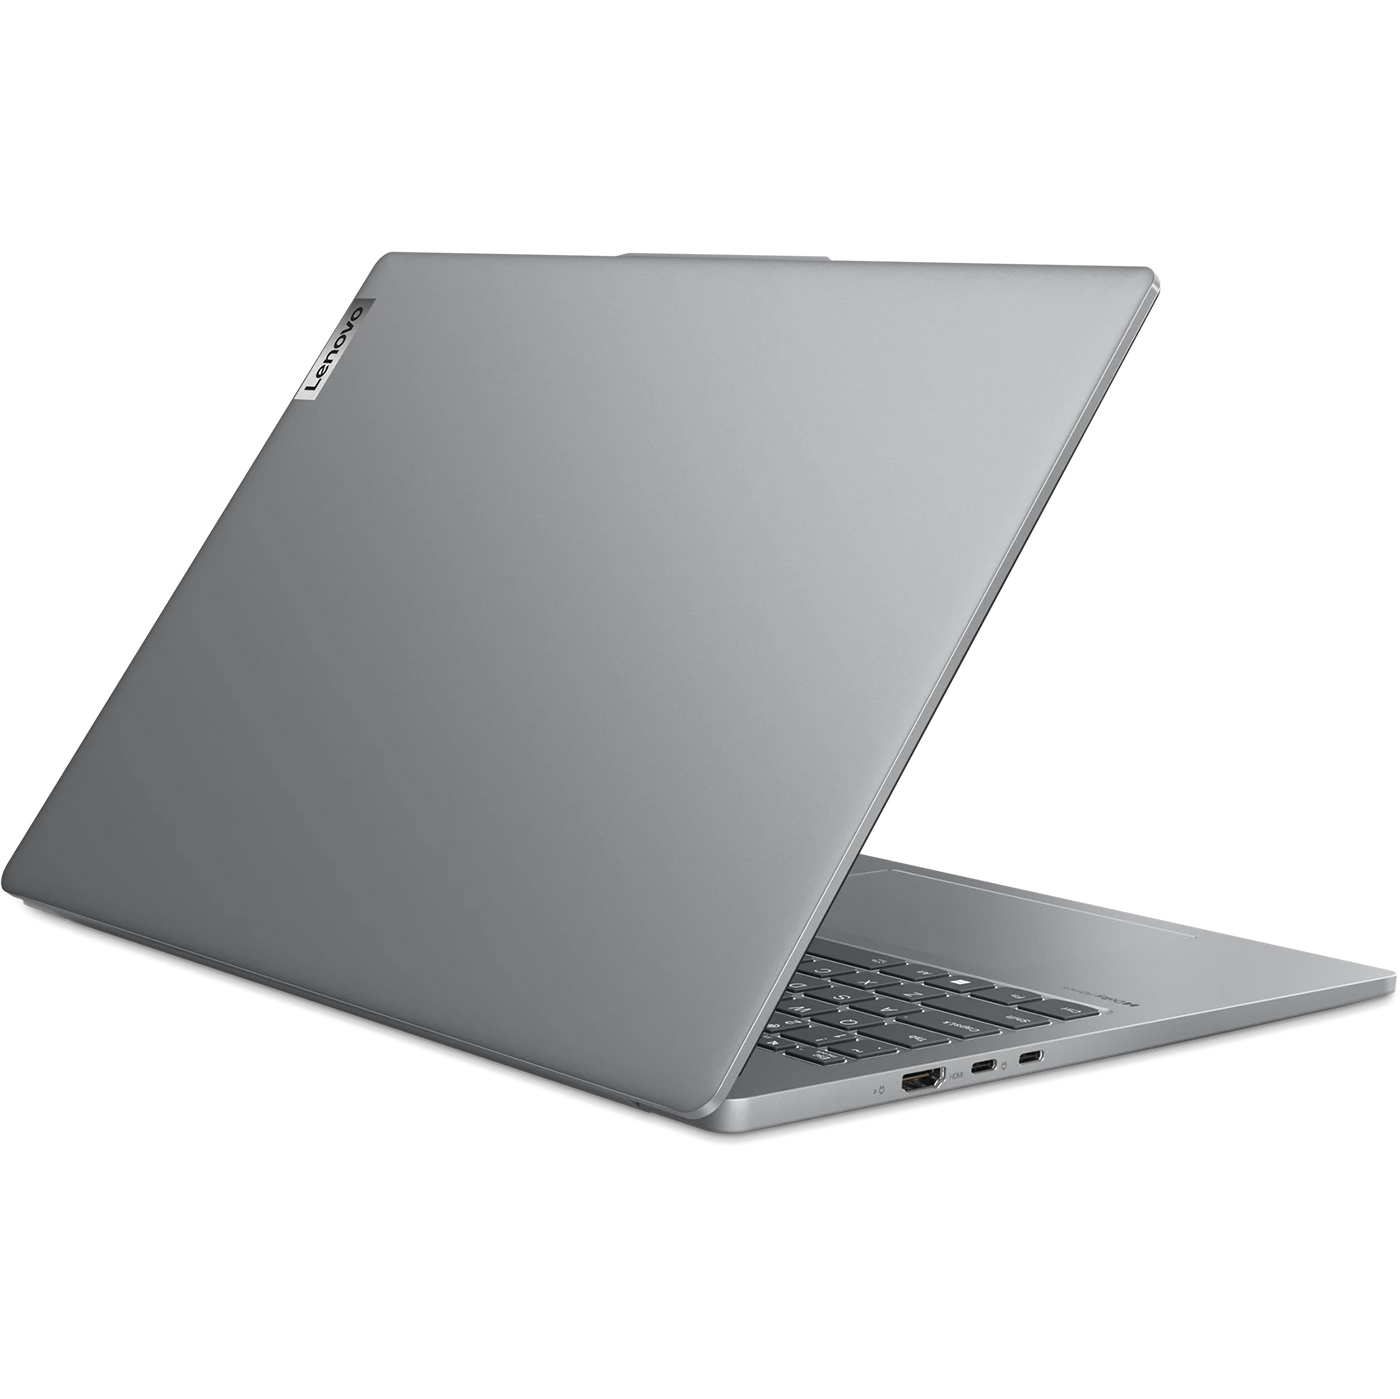 Lenovo ideapad slim 3 15iru8 серый 378221. Ноутбук Lenovo IDEAPAD Slim 3 15iru8.